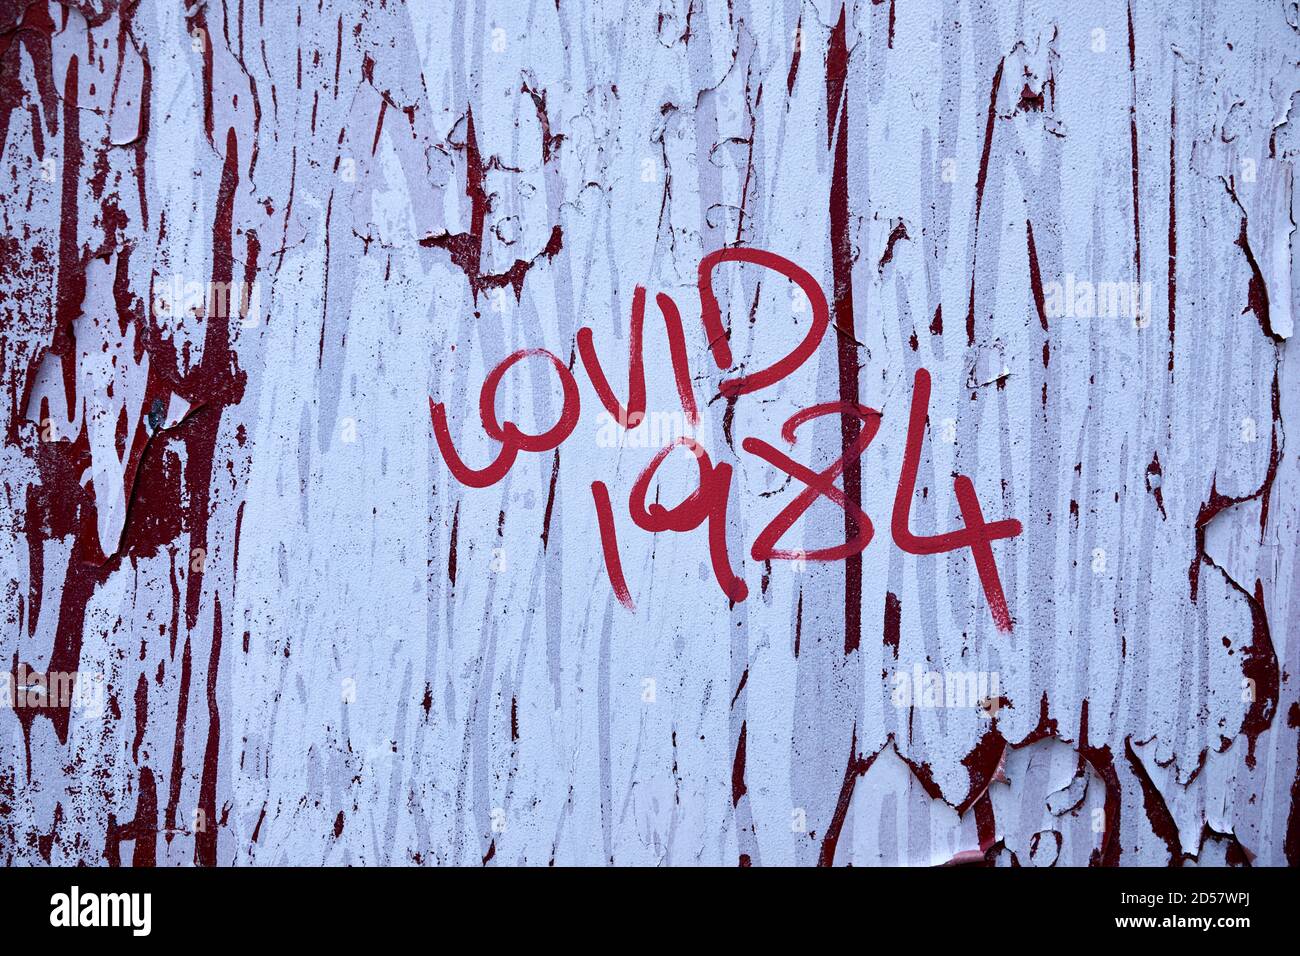 London, UK. - 11 Oct 2020: Graffiti saying 'COVID 1984' scrawled on a telephone box during the coronavirus pandemic. Stock Photo